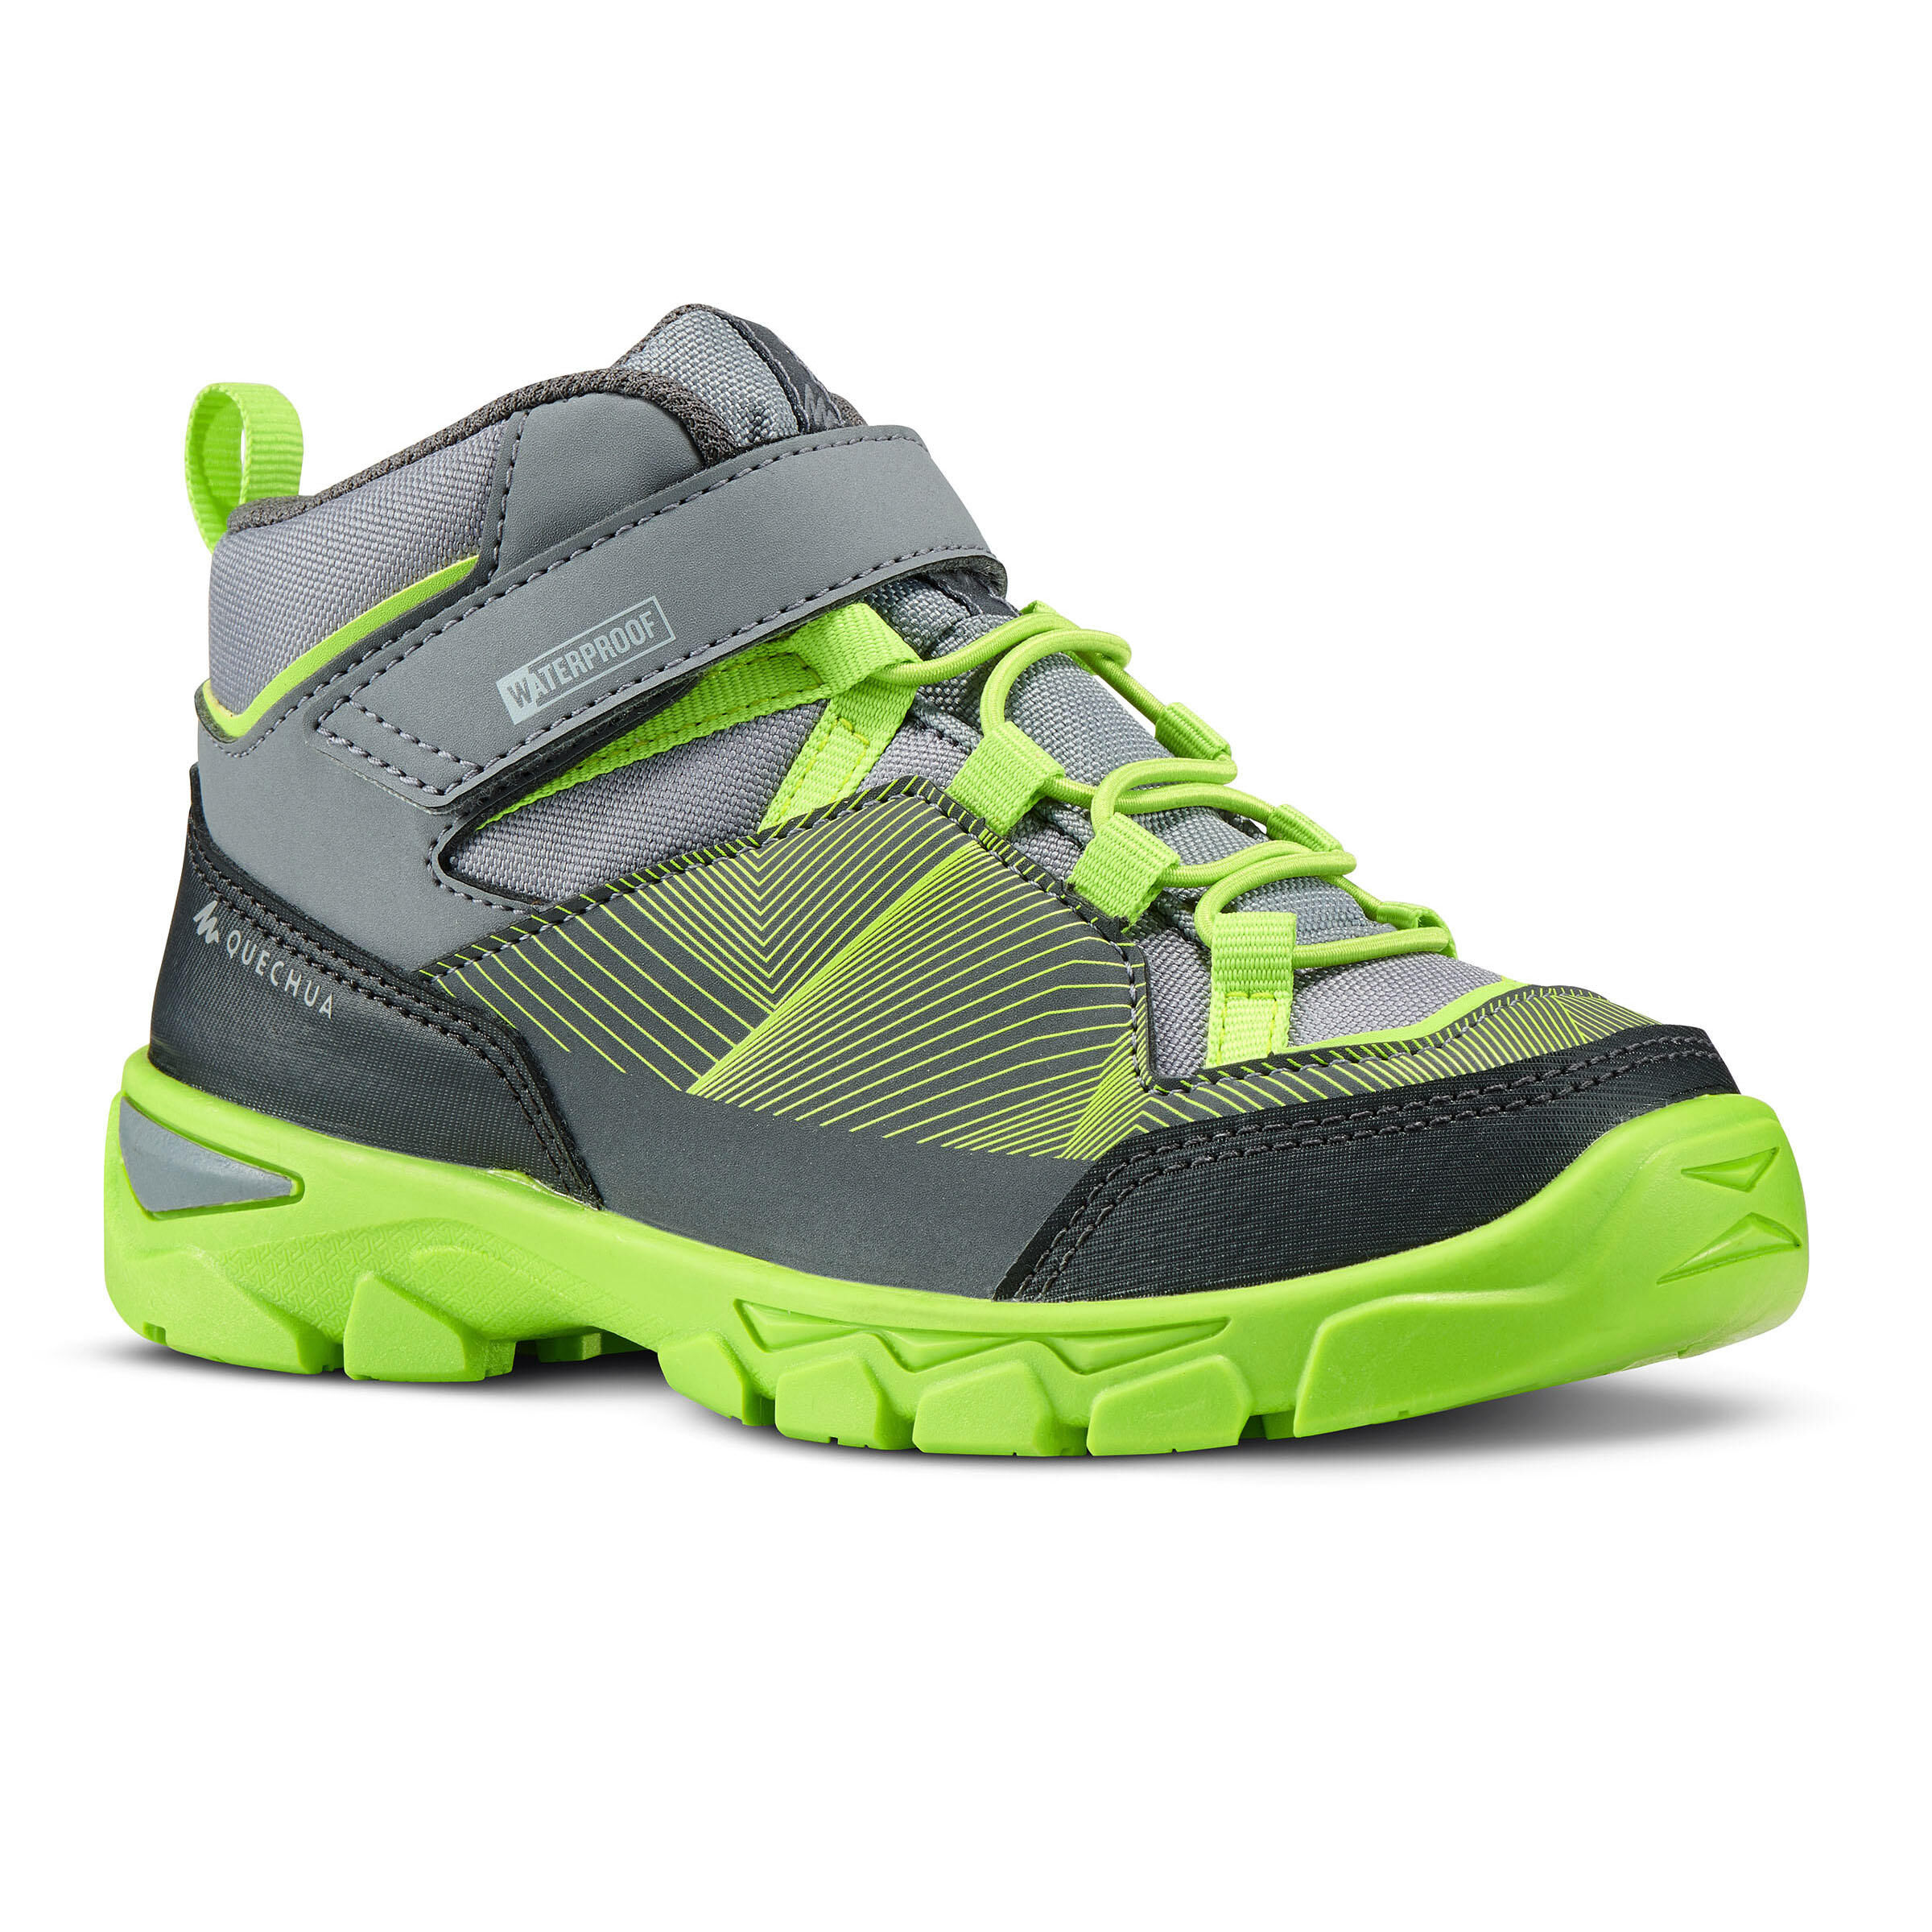 QUECHUA Children's waterproof walking shoes - MH120 MID grey - size jr. 10 - ad. 2